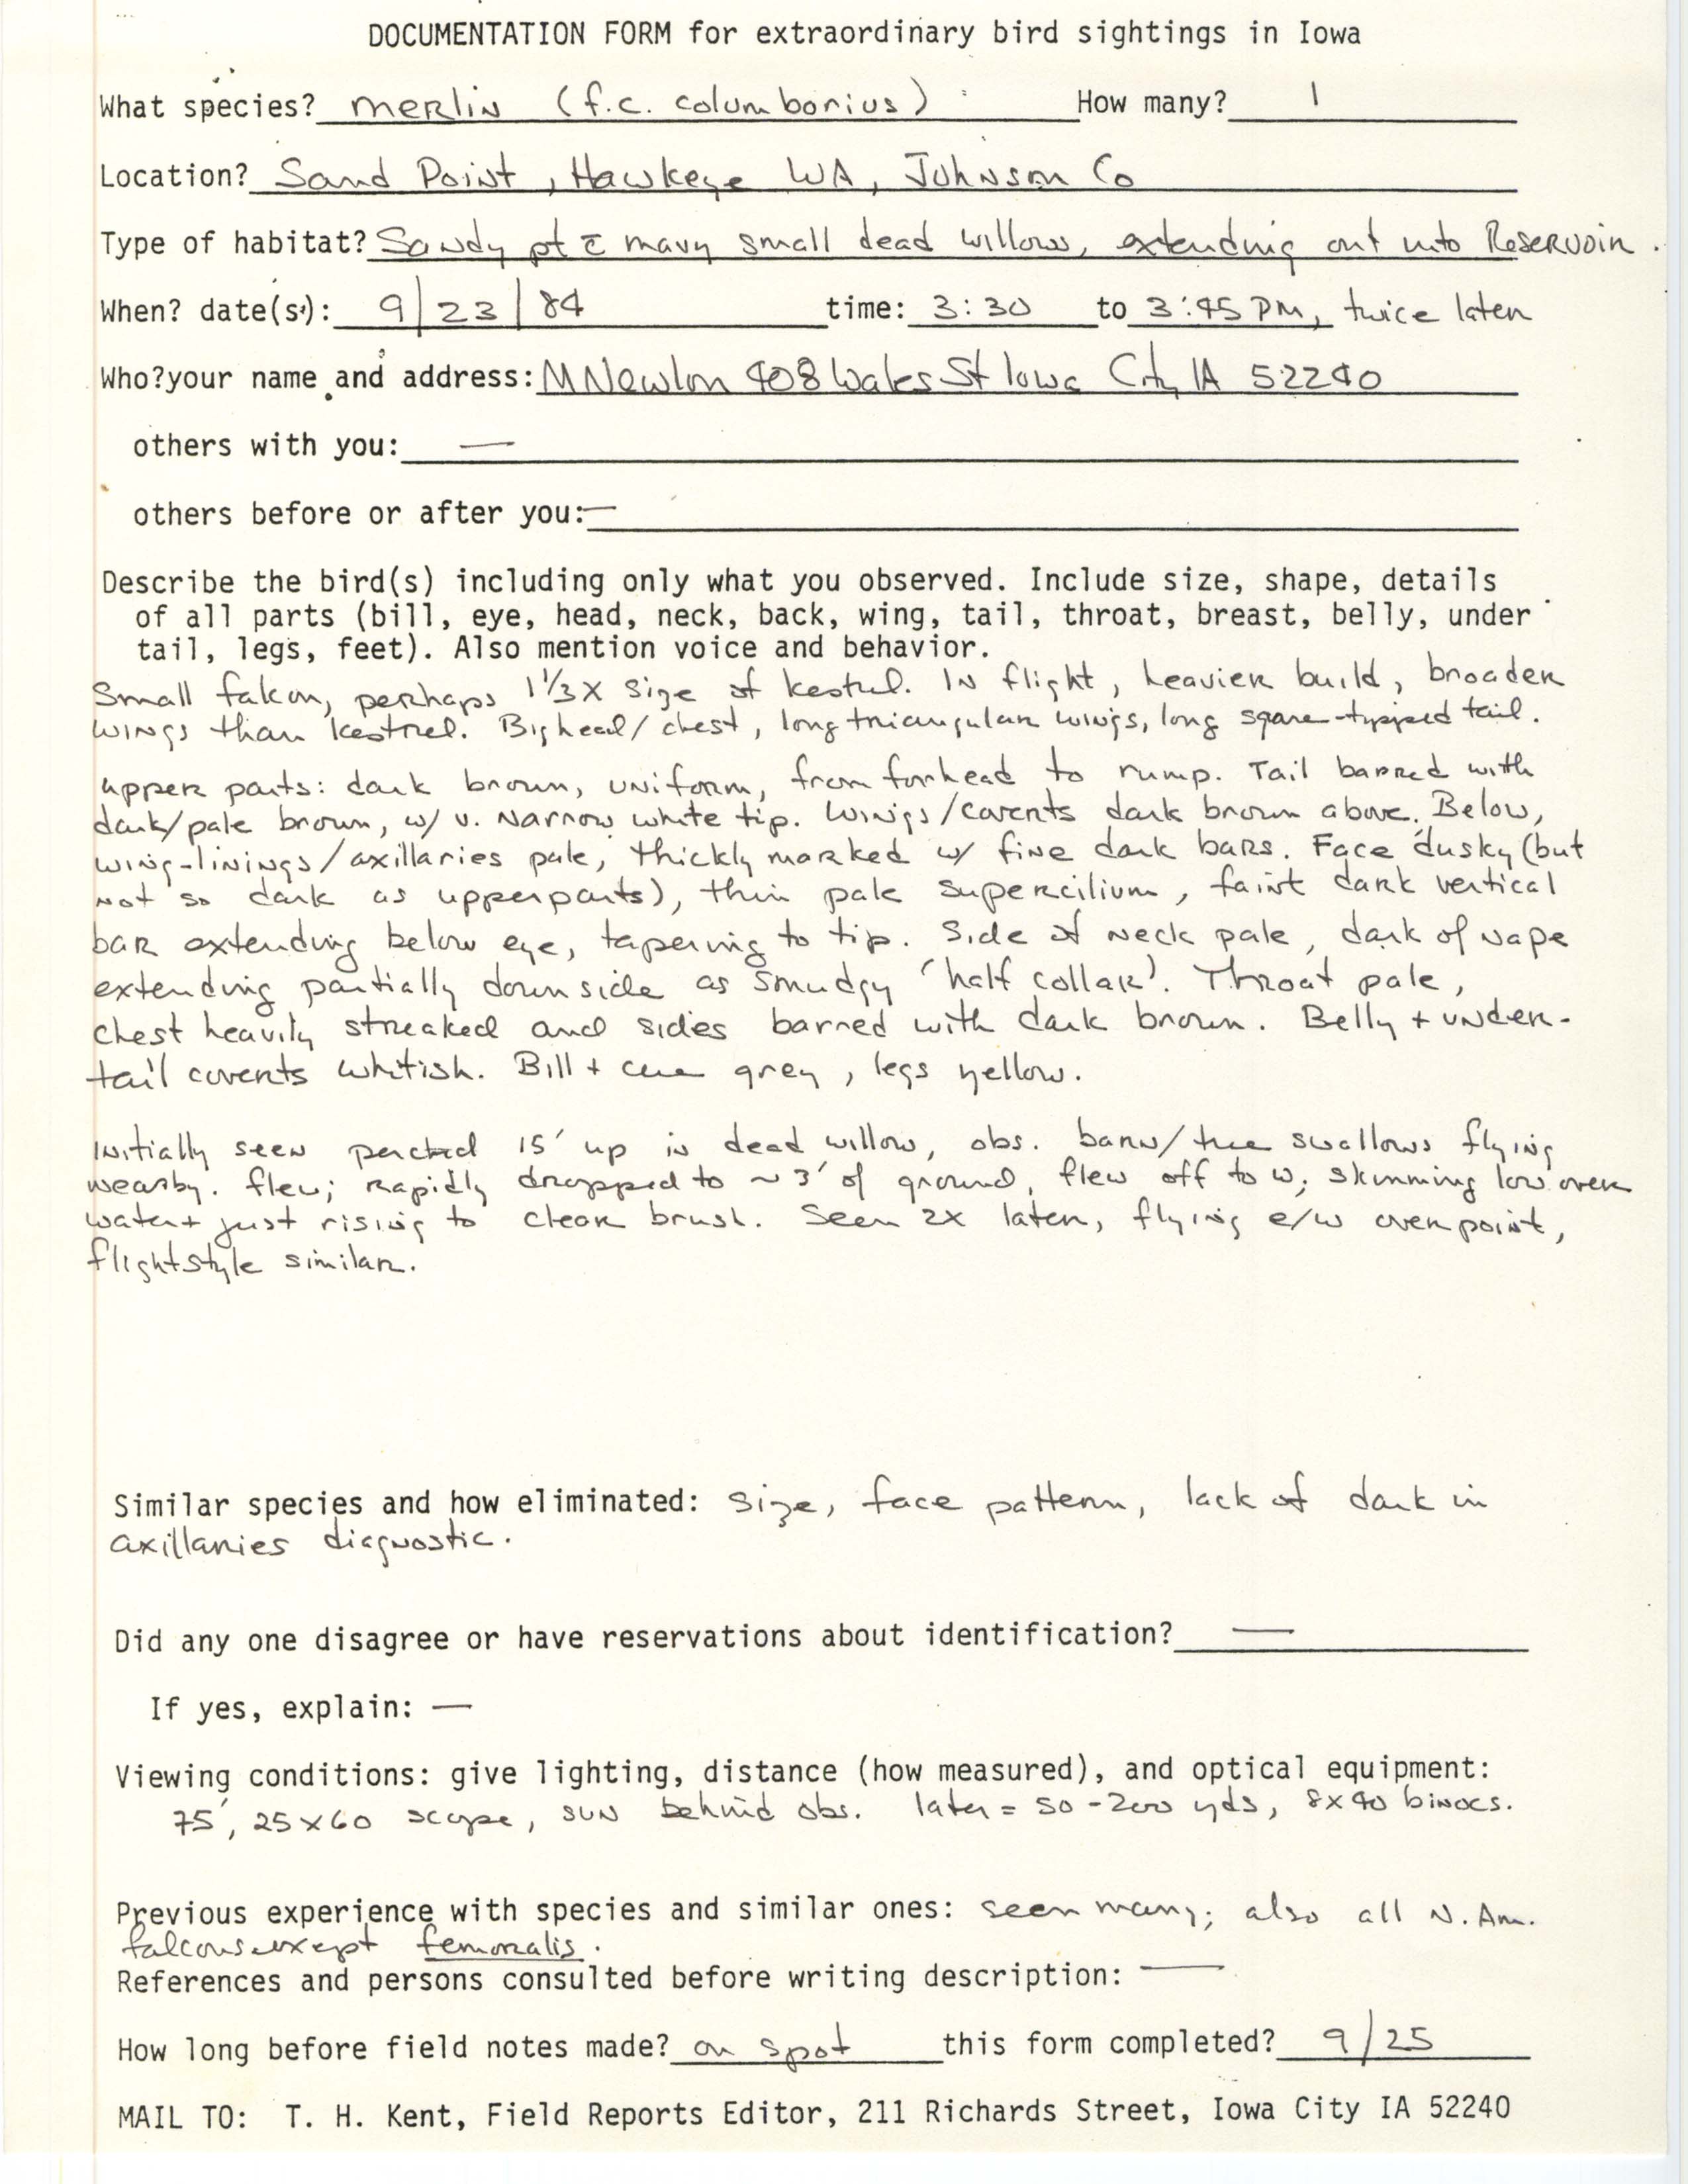 Rare bird documentation form for Merlin at Sand Point in Hawkeye Wildlife Area, 1984